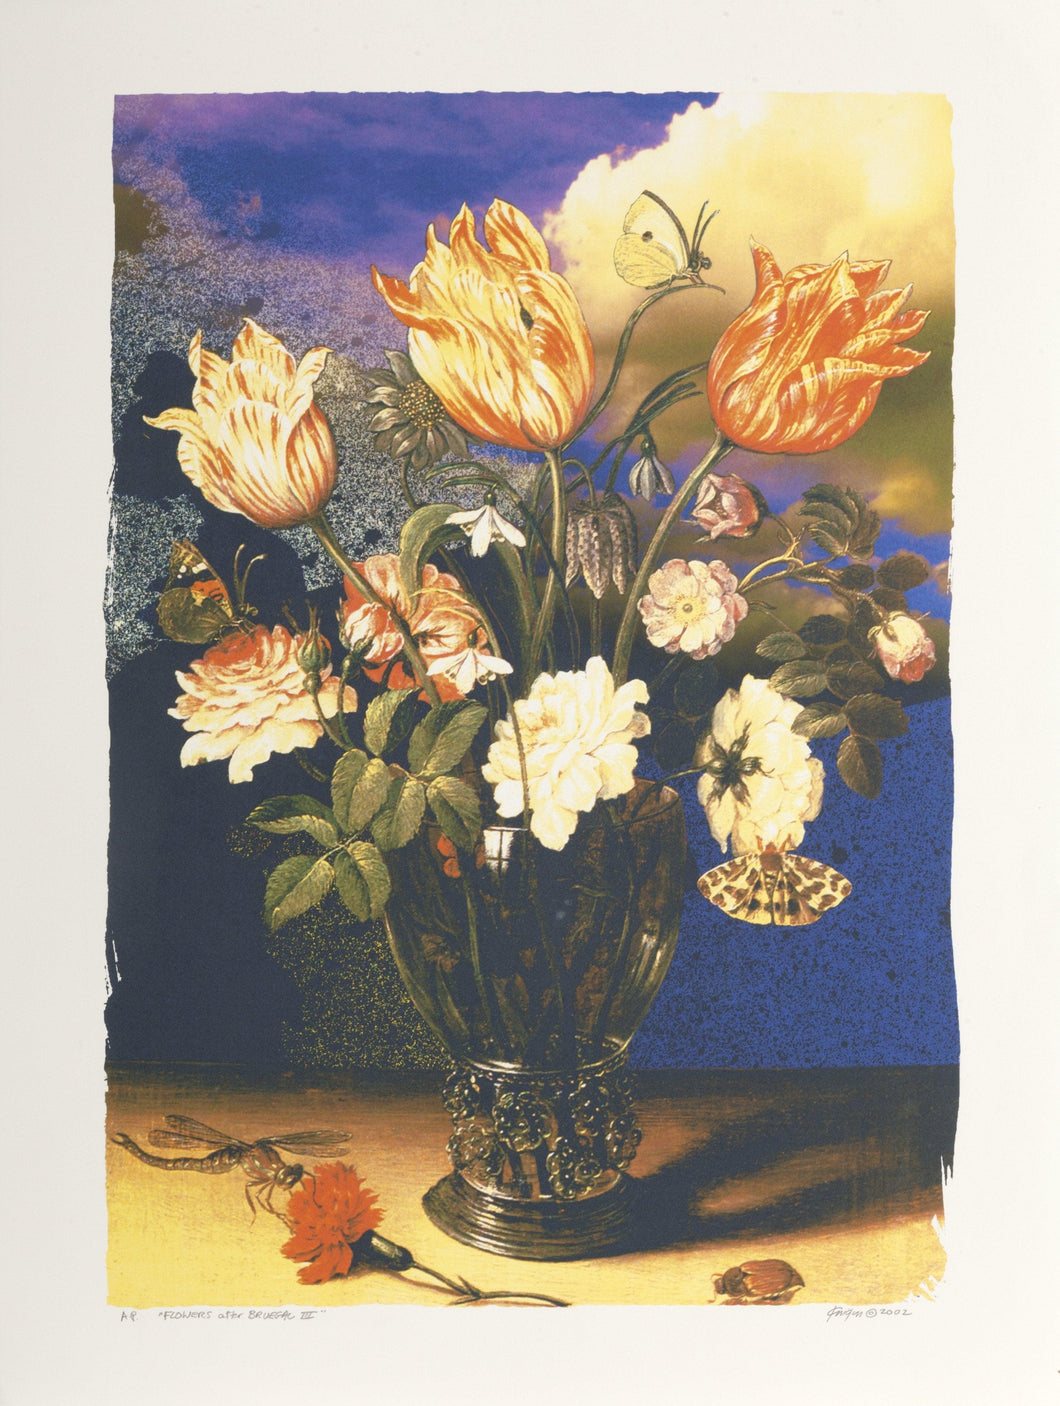 Flowers After Bruegel III Digital | Michael Knigin,{{product.type}}